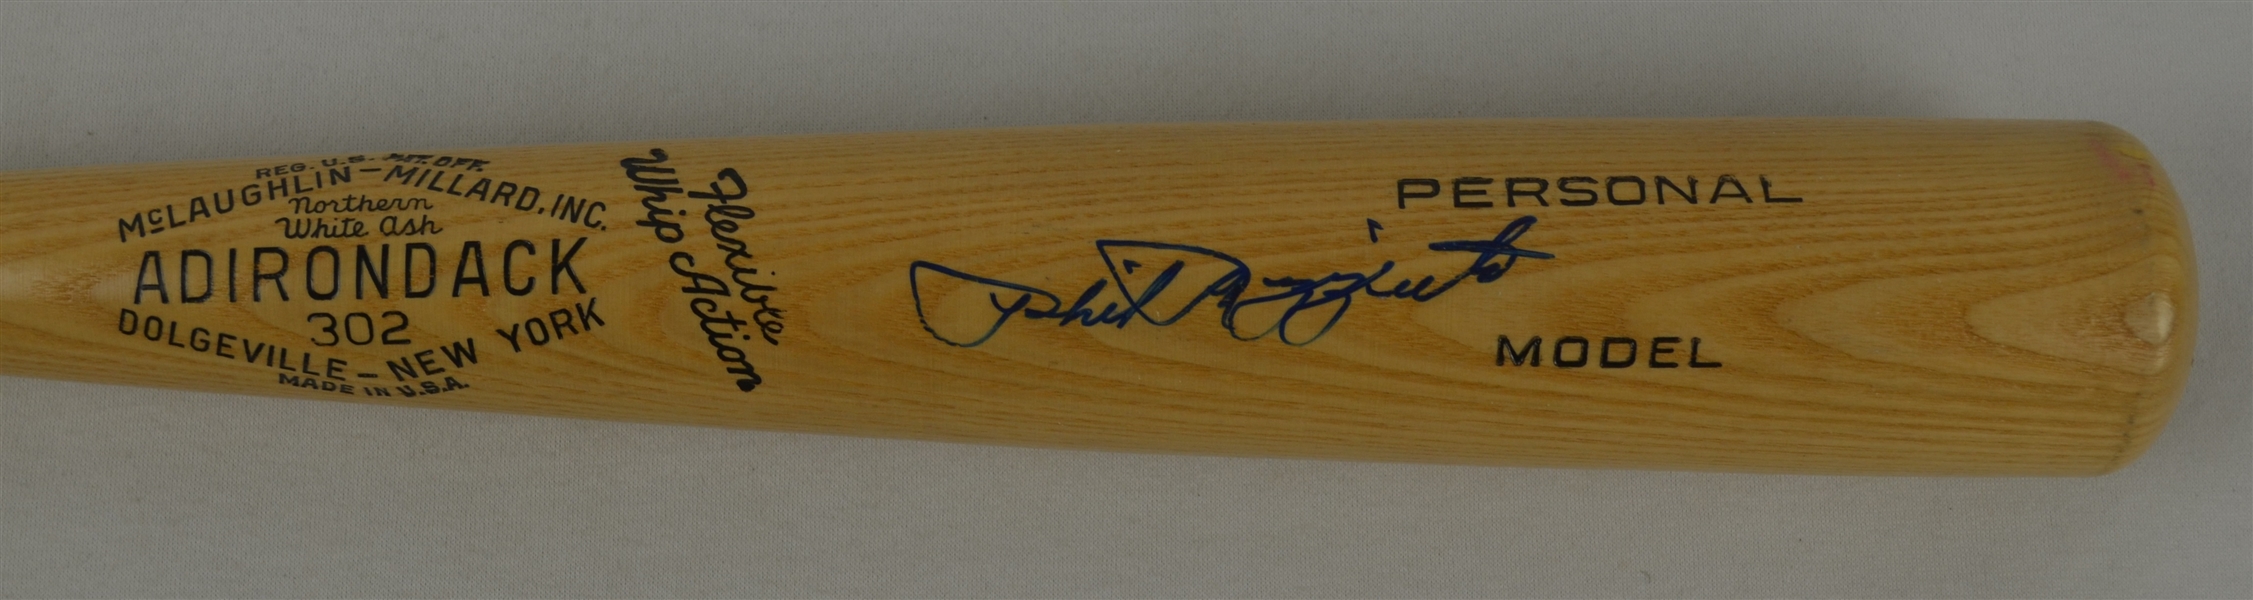 Phil Rizzuto Autographed Adirondack New York Yankees Bat